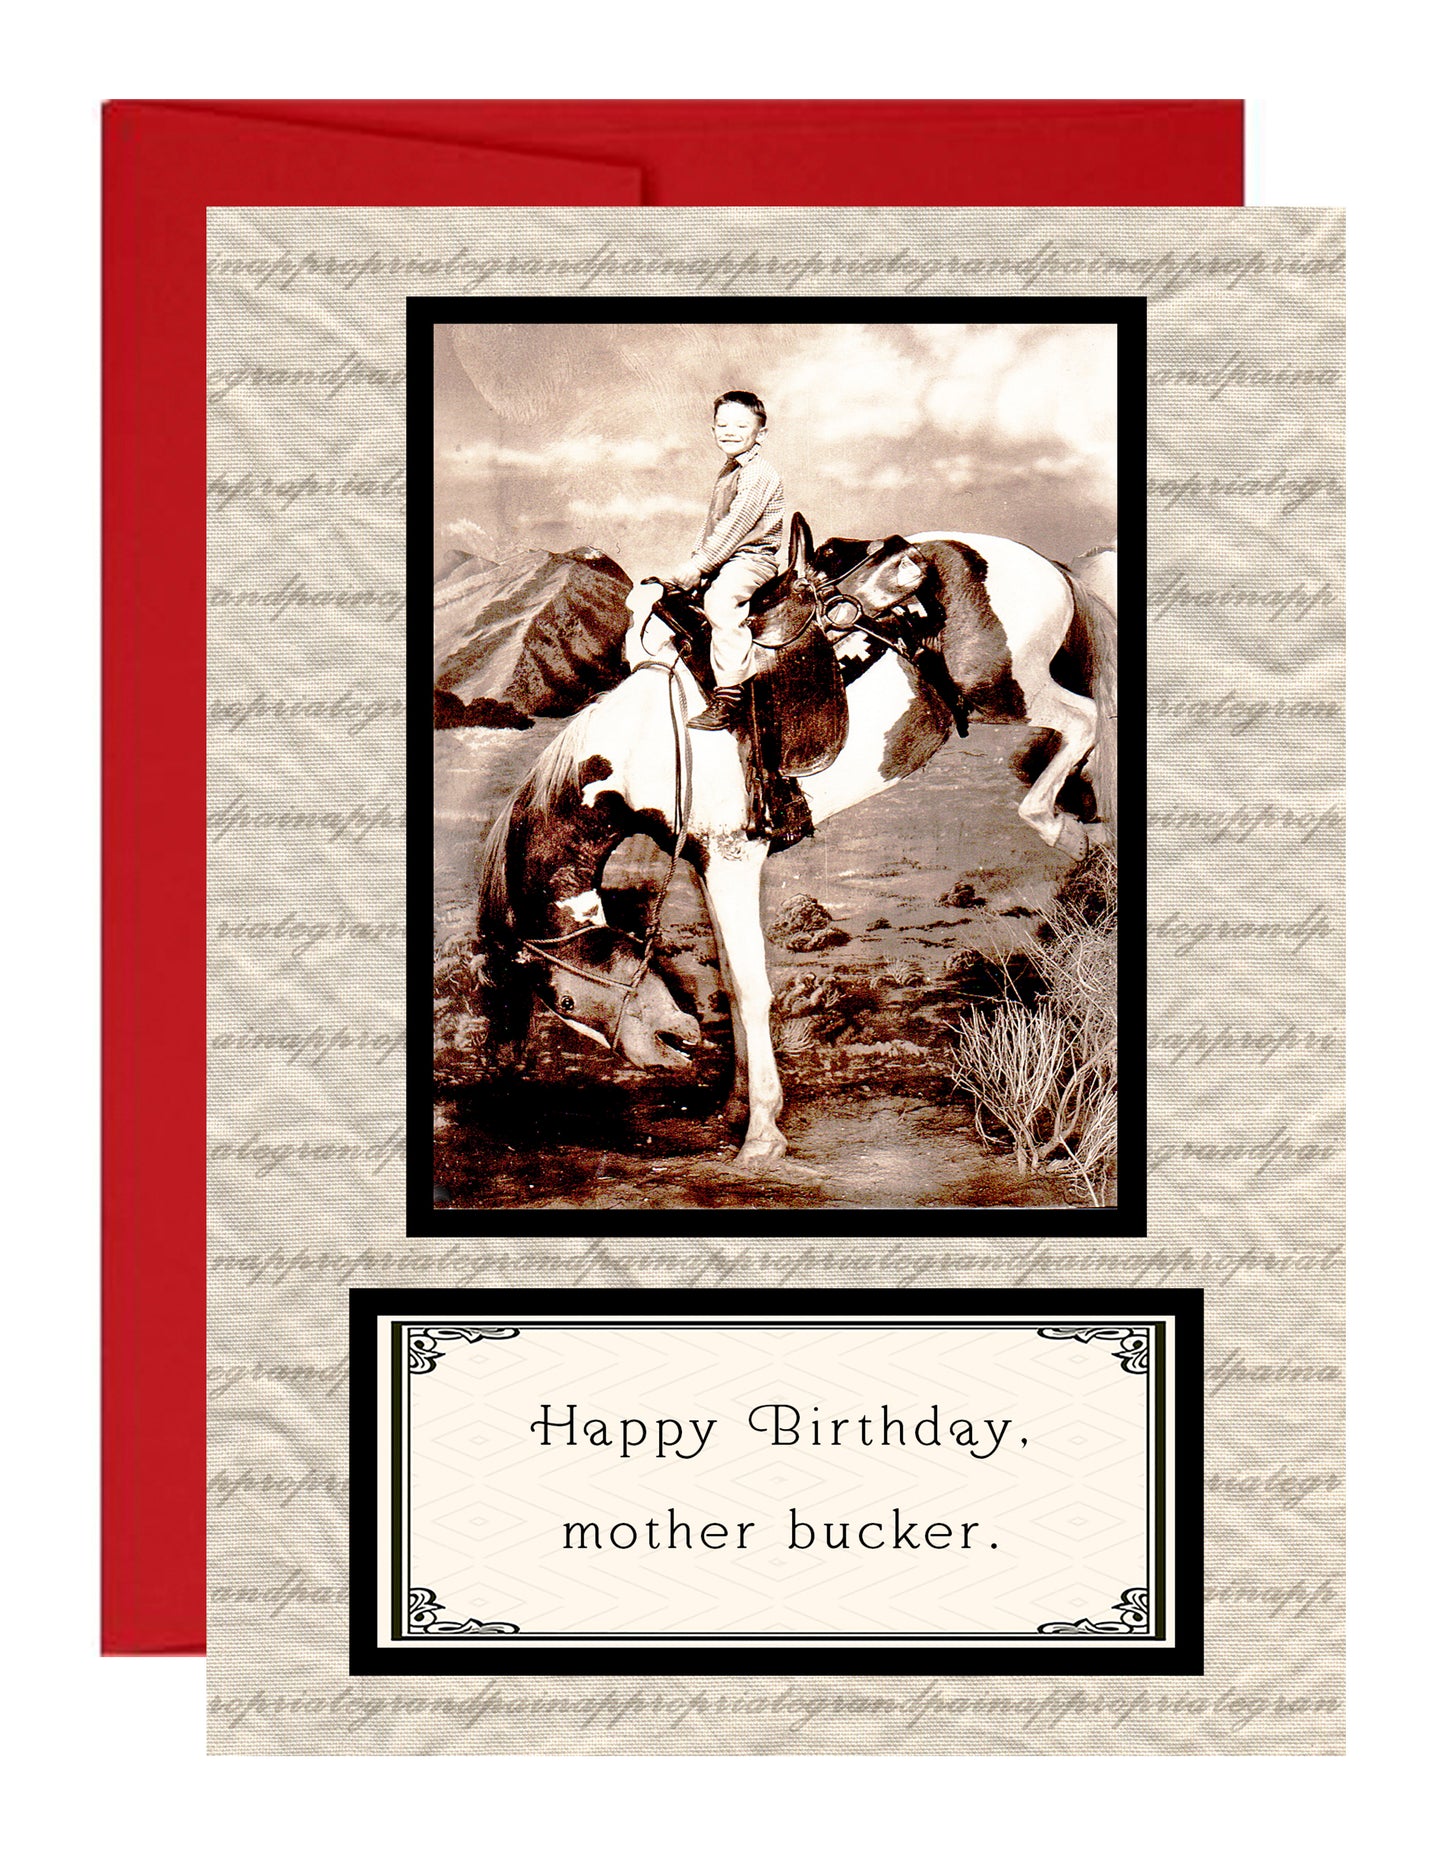 Happy Birthday, Mother Bucker